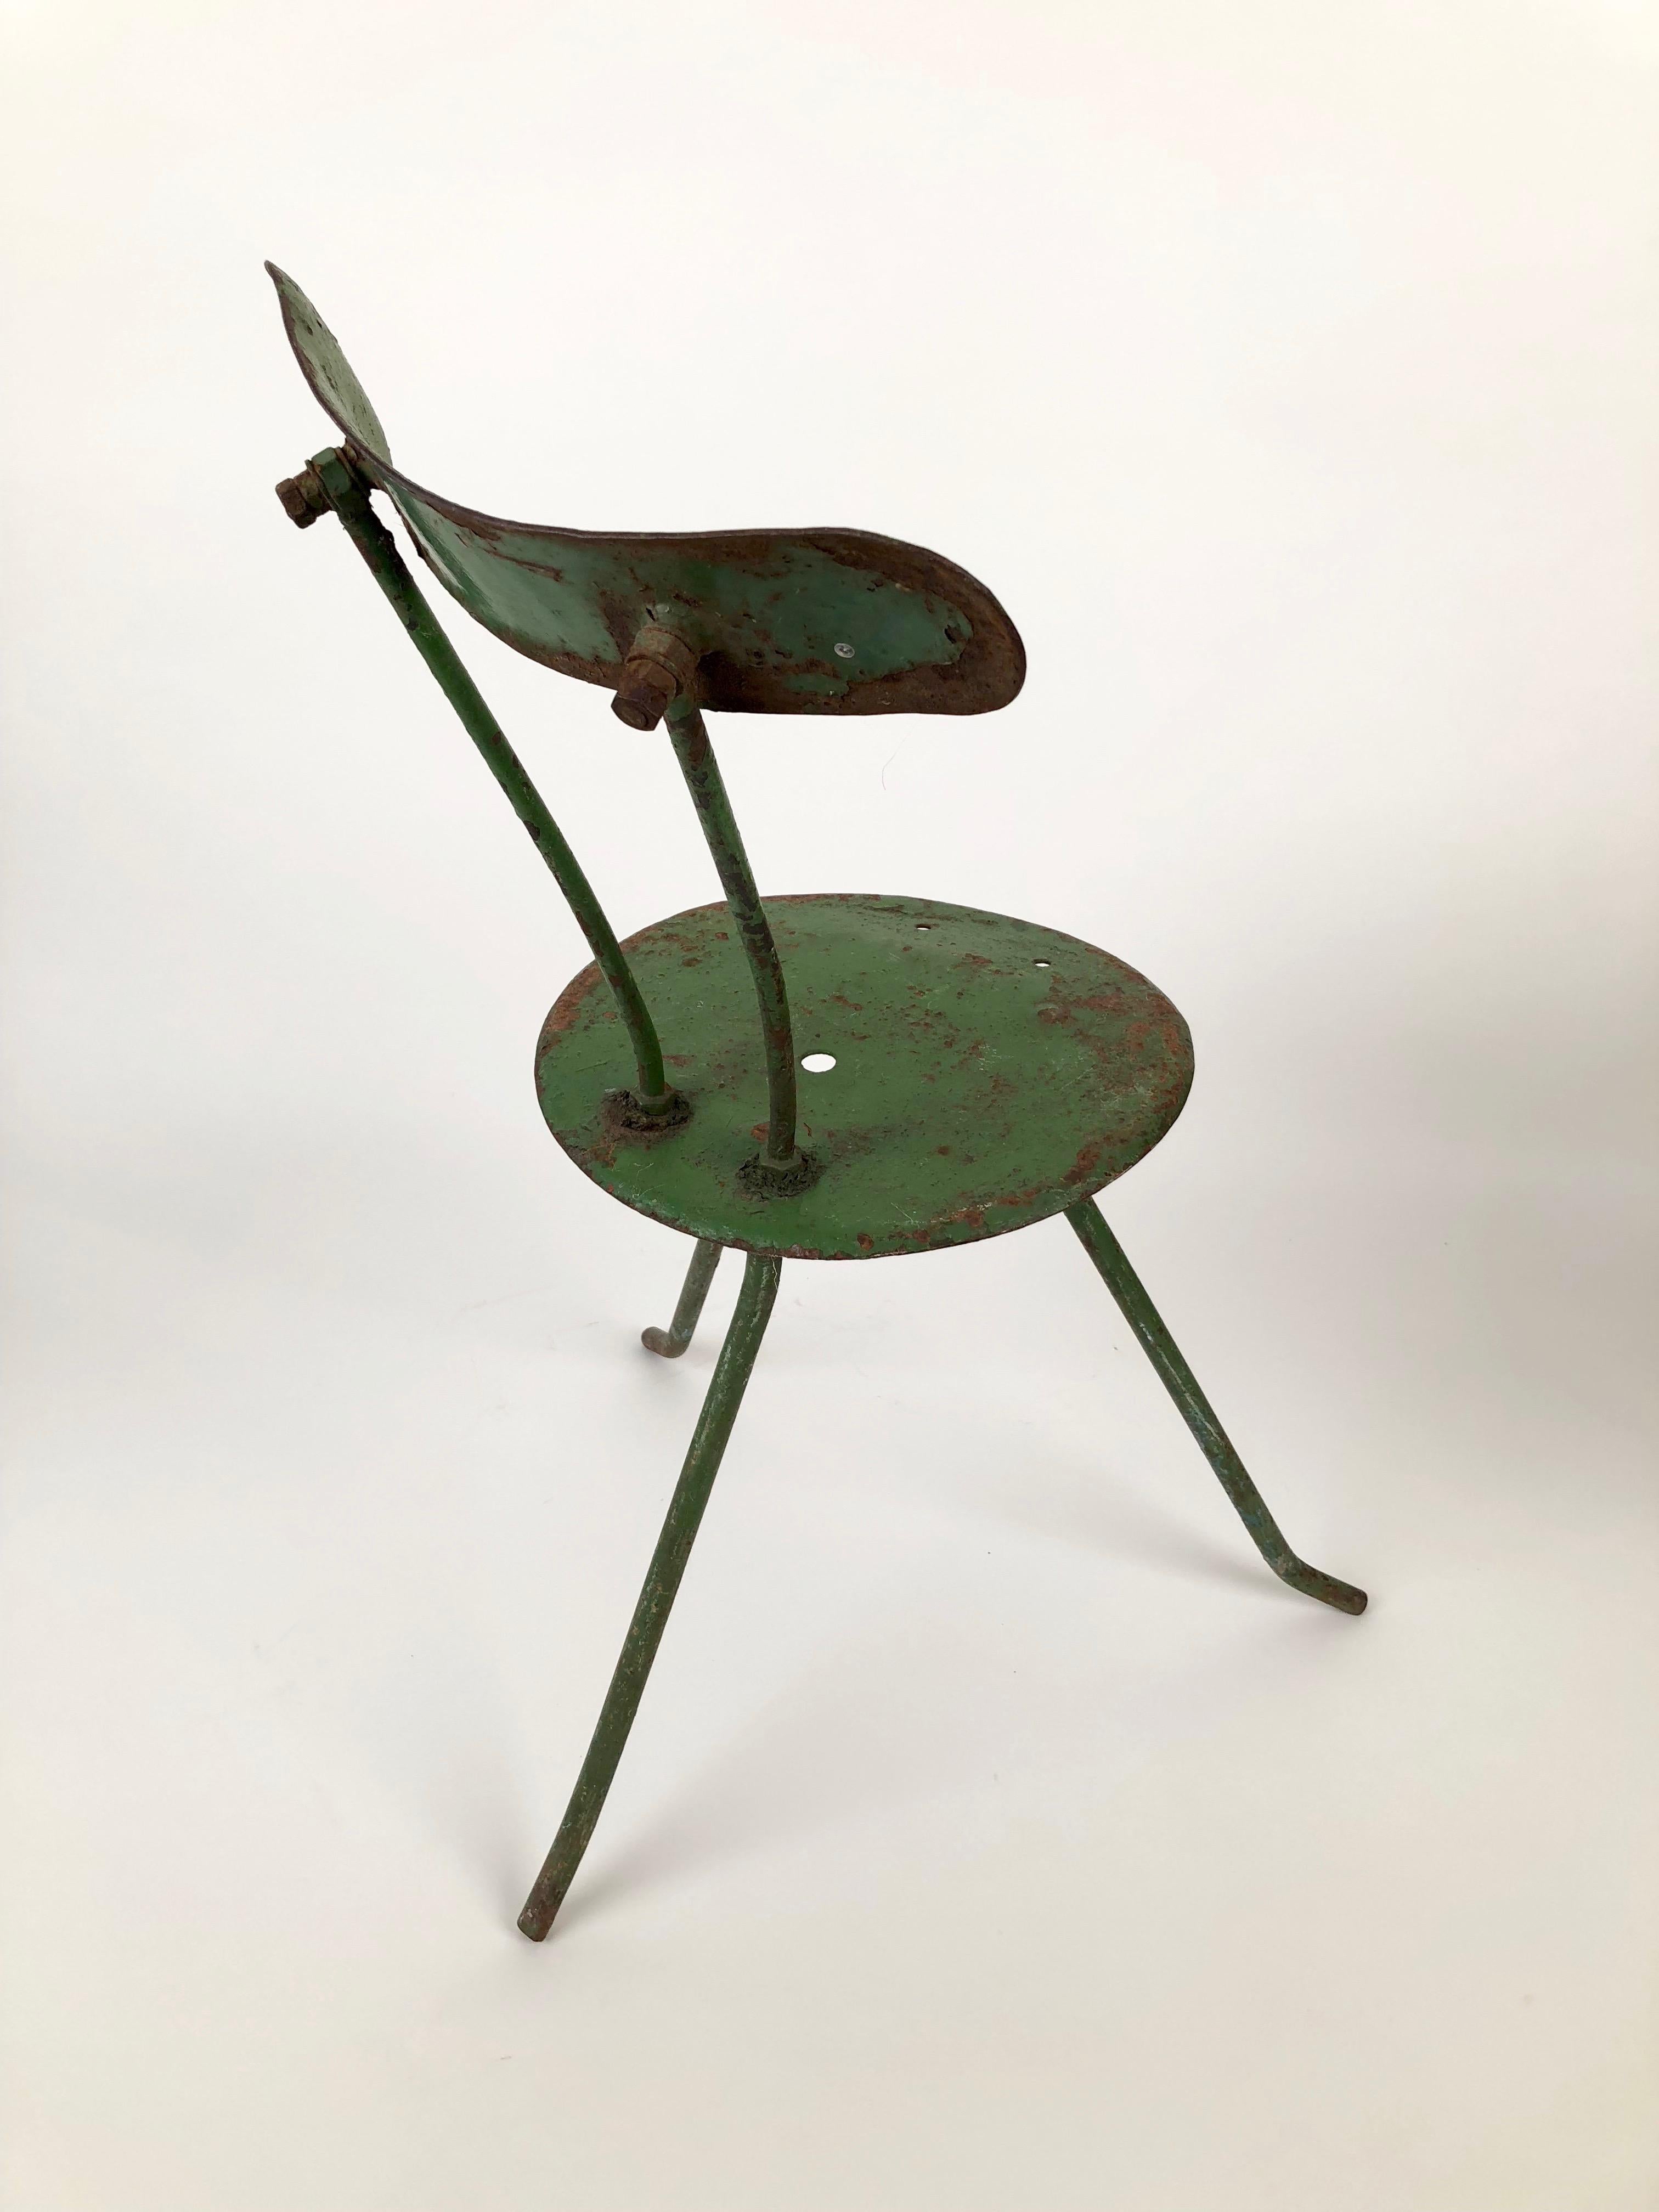 Pair of Handmade Metal Chairs, 1950s, from the Balaton Lake Region, Hungary For Sale 6